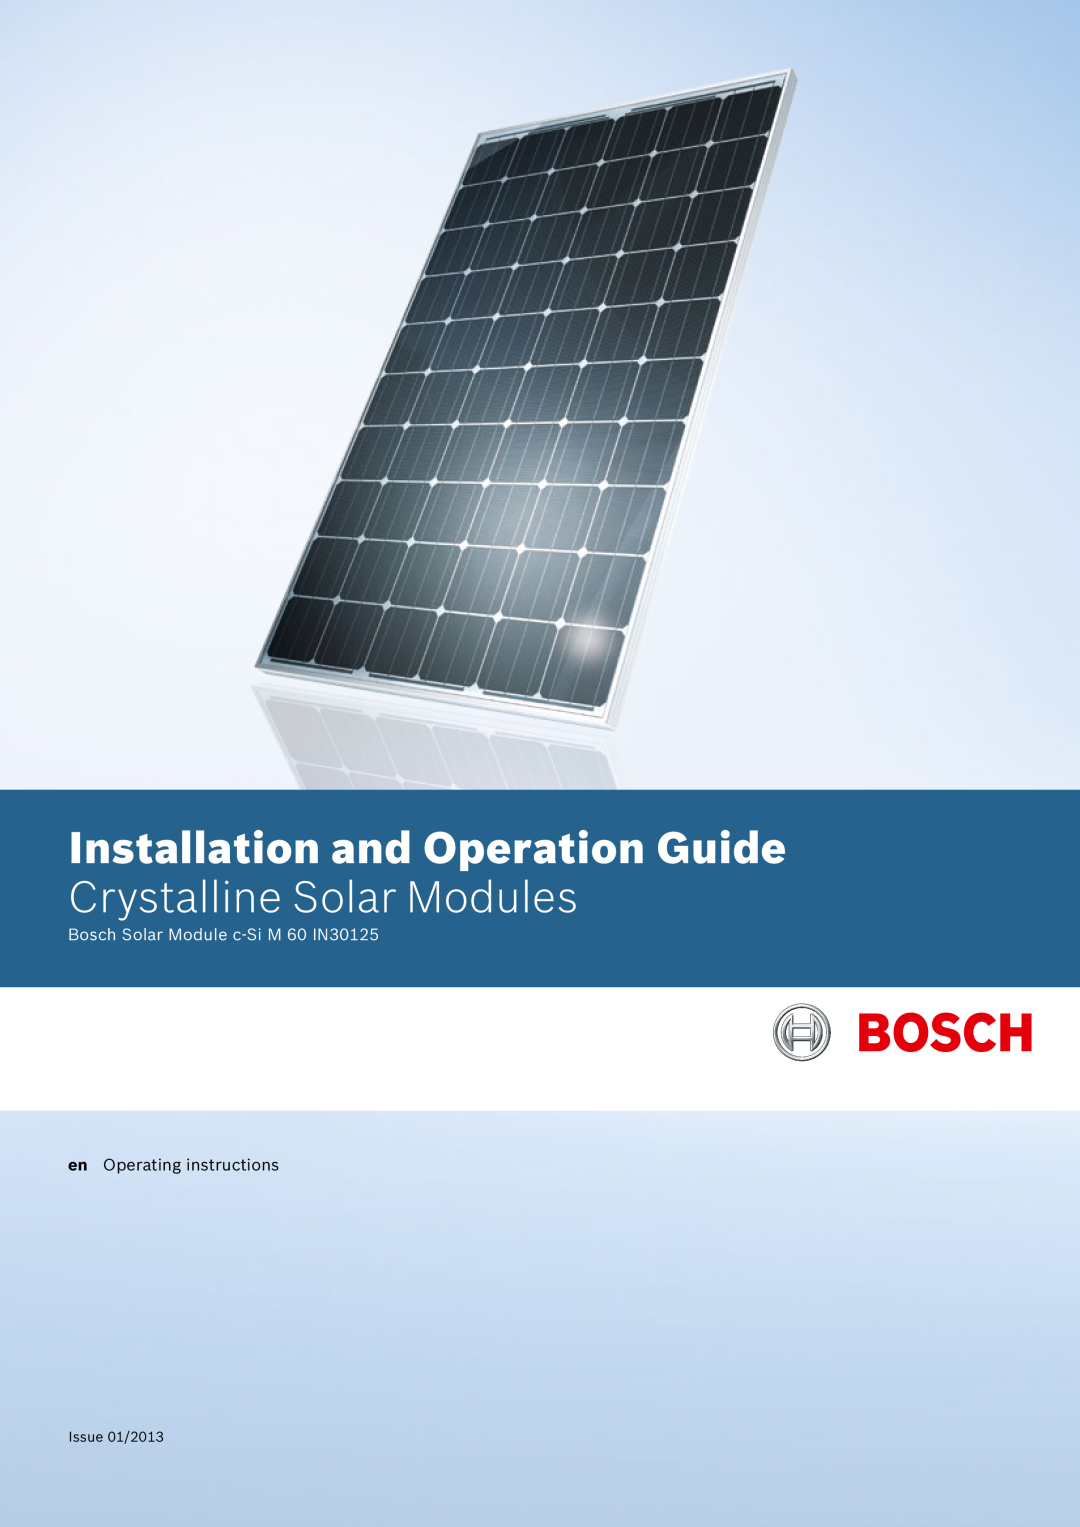 Bosch Appliances installation and operation guide deutsch, Bosch Solar Module c-Si M 60 IN30125, Robert Bosch GmbH 